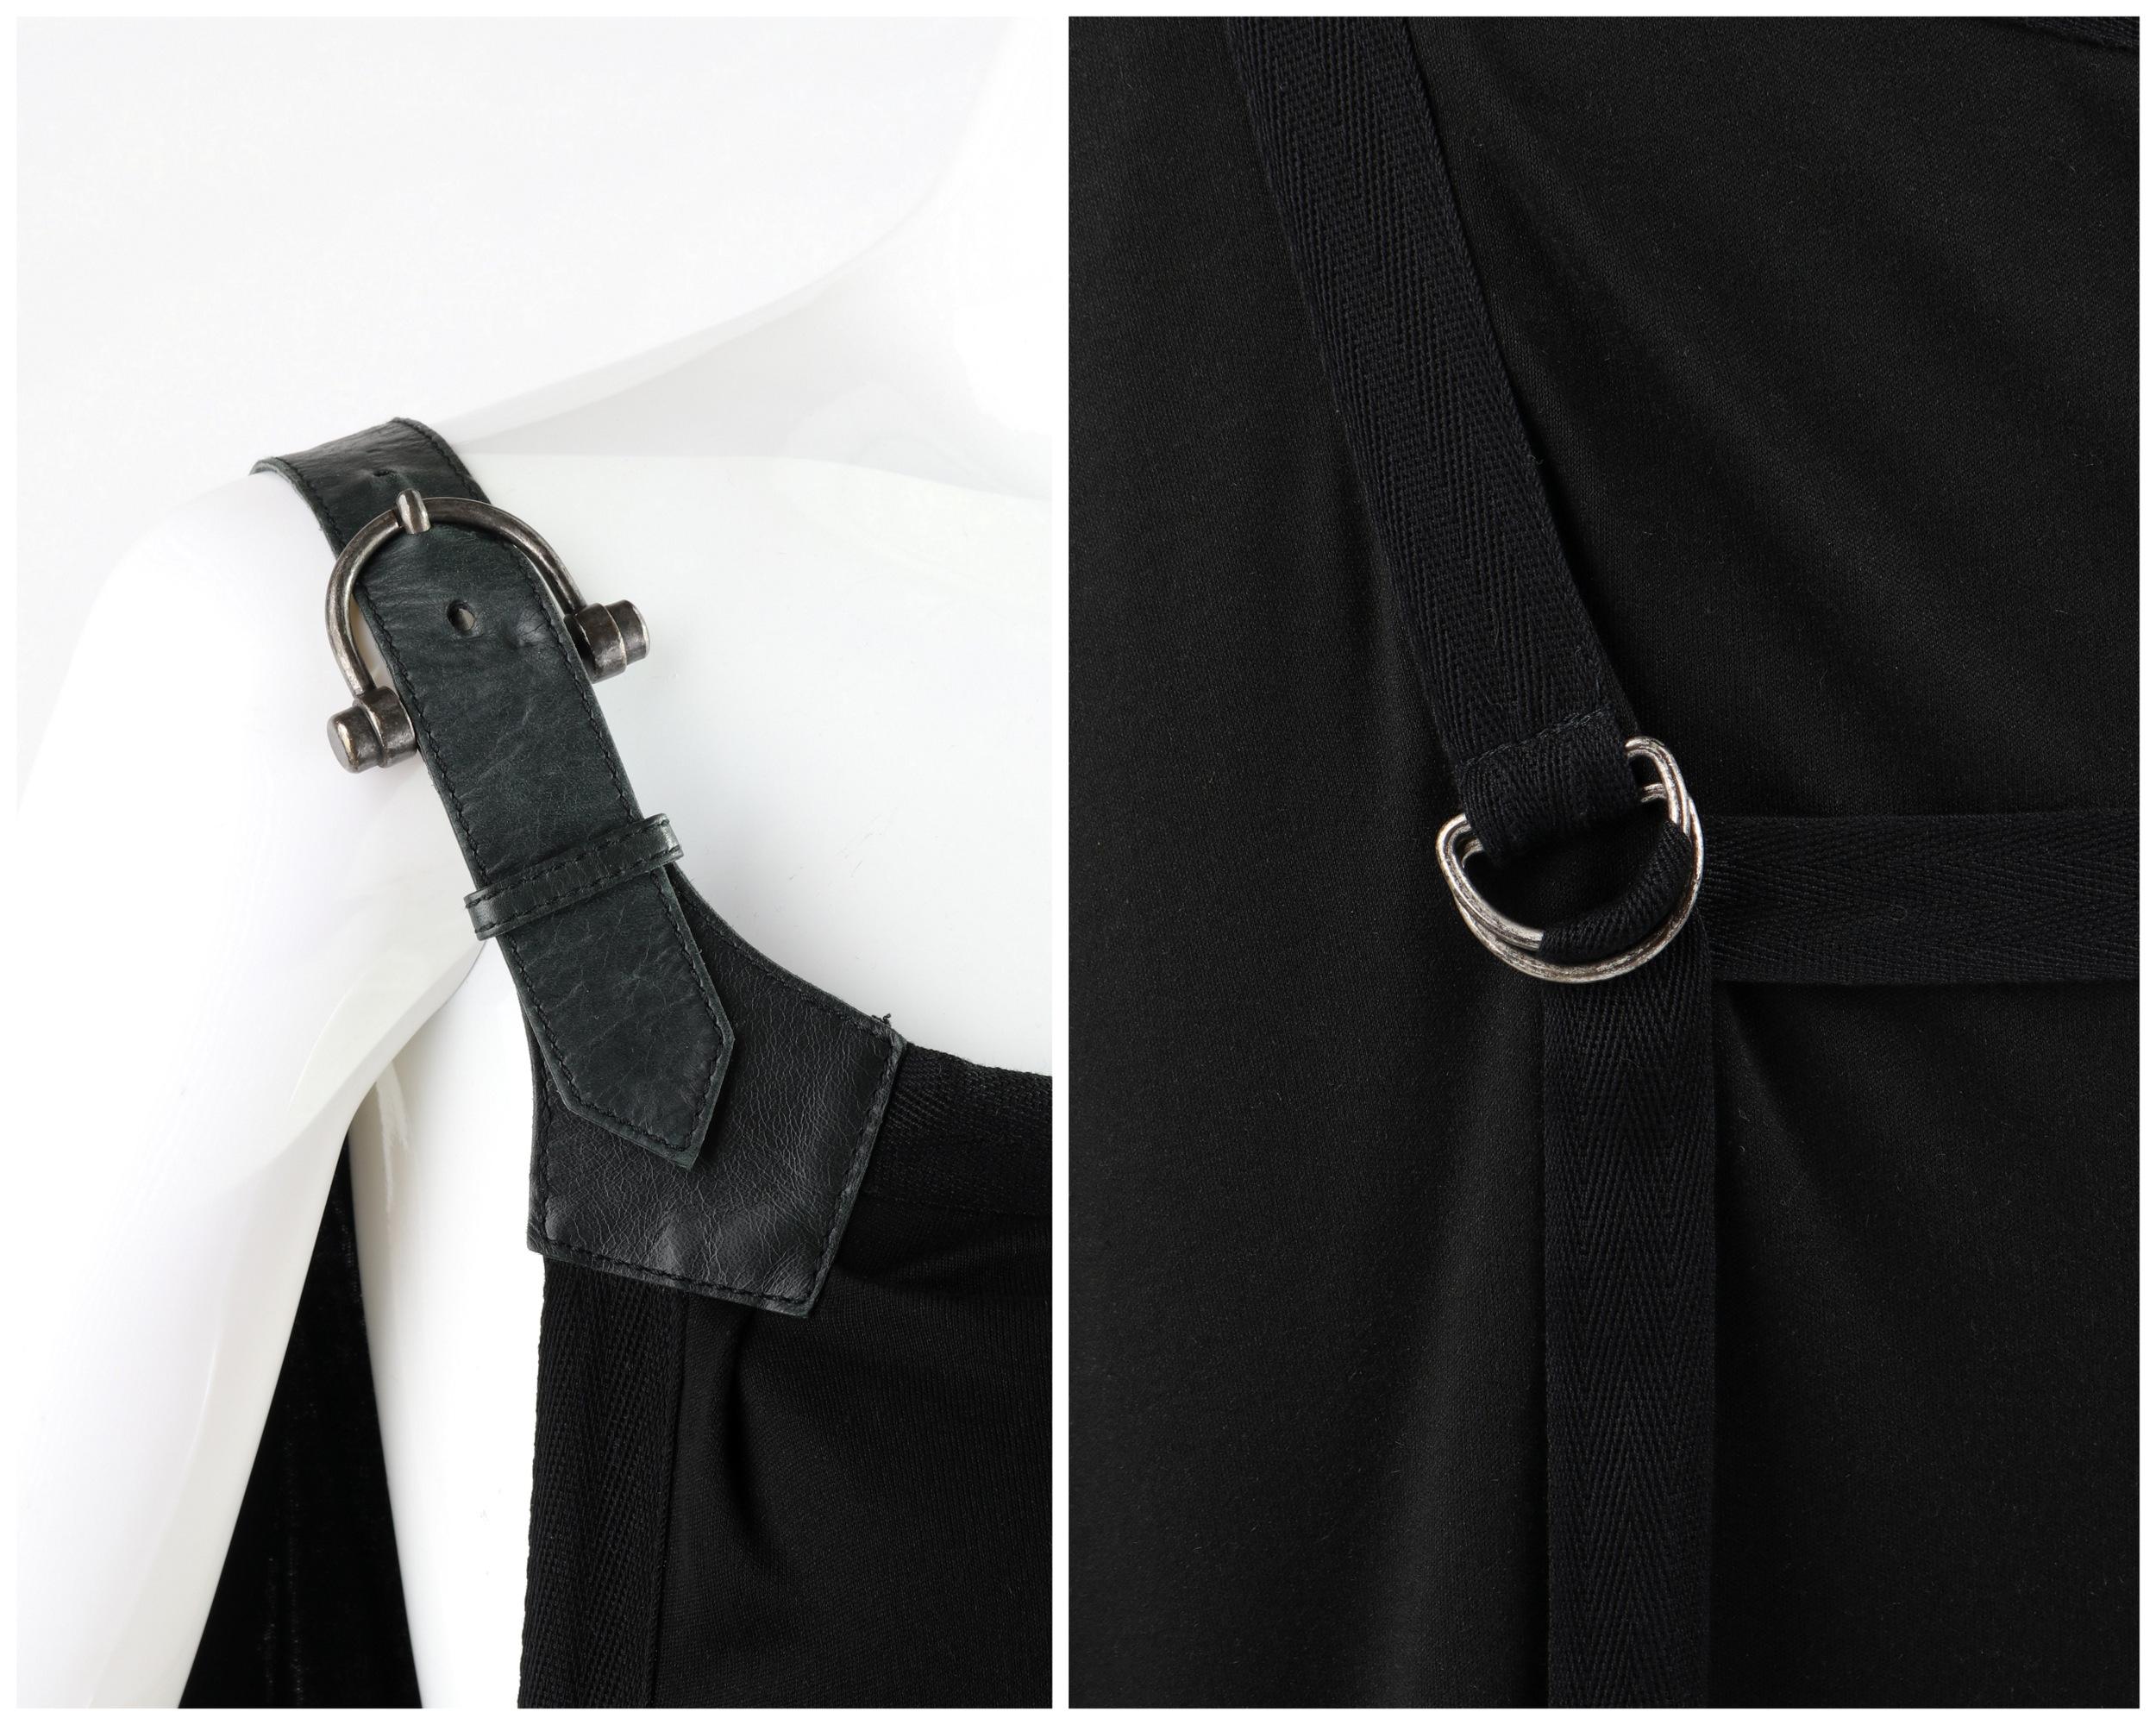 Women's ALEXANDER McQUEEN S/S 2003 “Irere” Black One Shoulder Leather Buckle Strap Dress